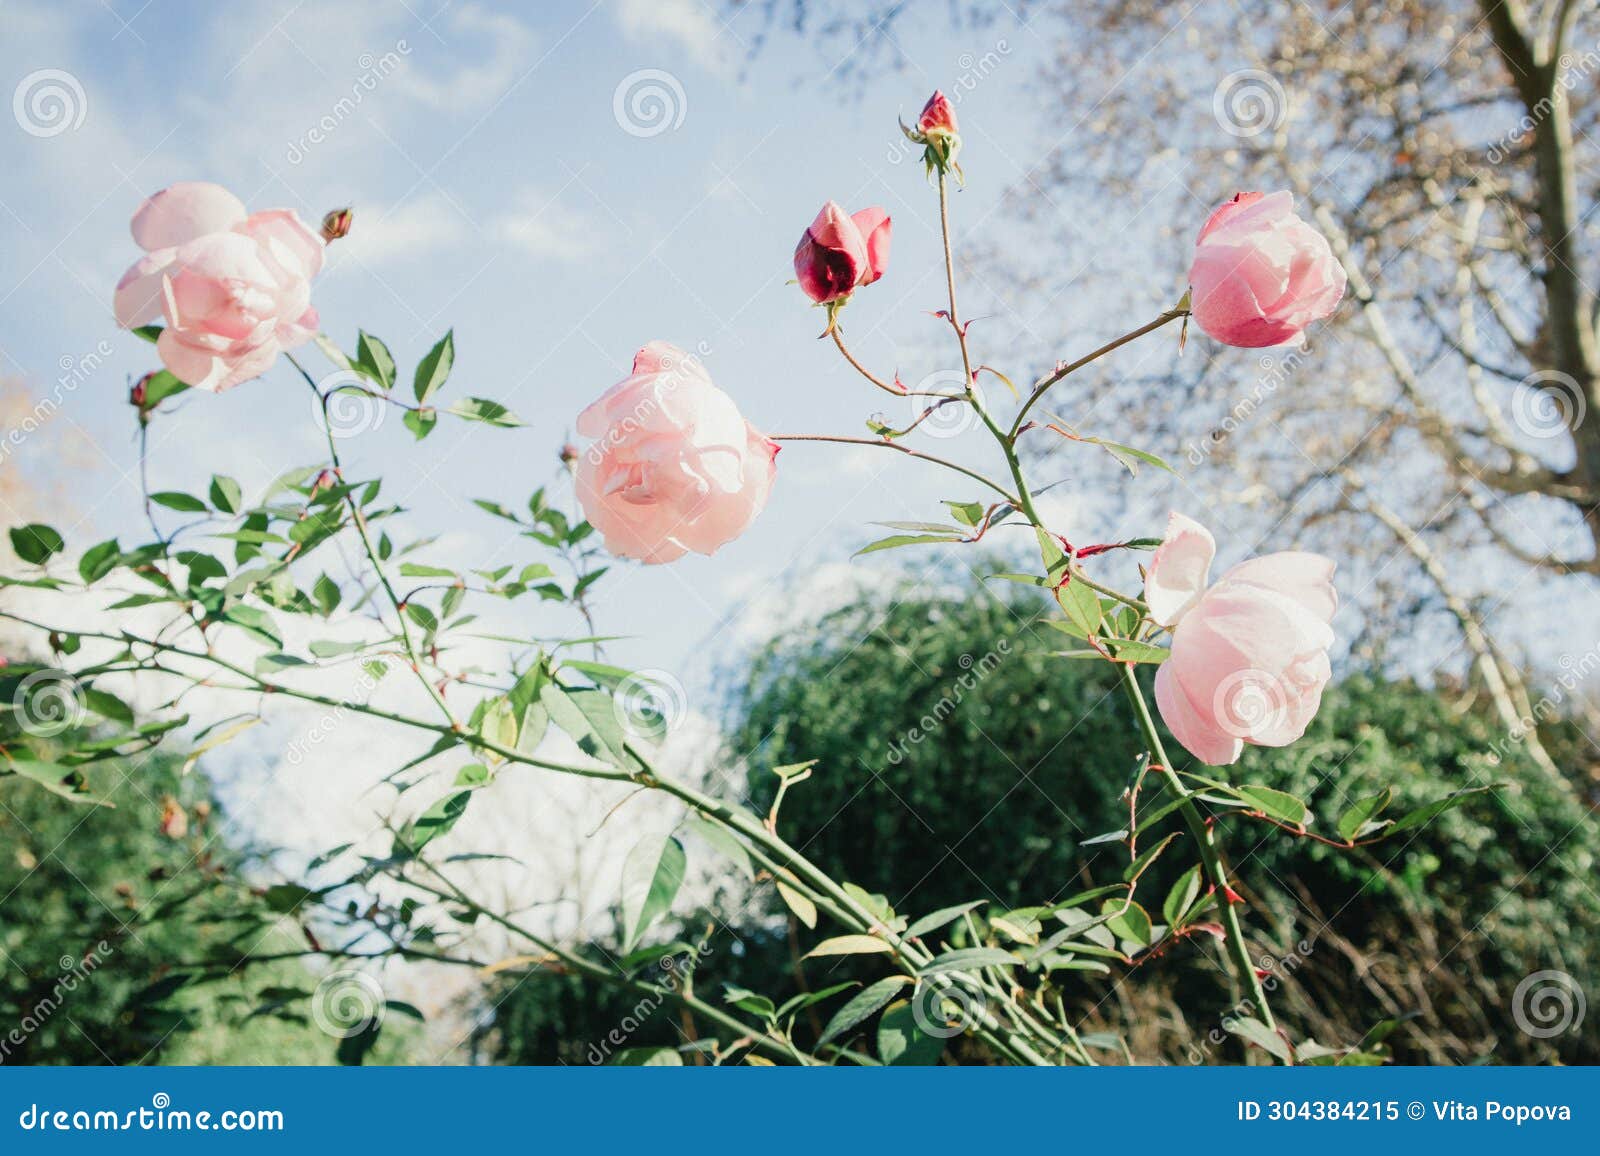 Pink Rose Buds, Hip Tea Roses Growing on a Bush Against Blue Sky ...